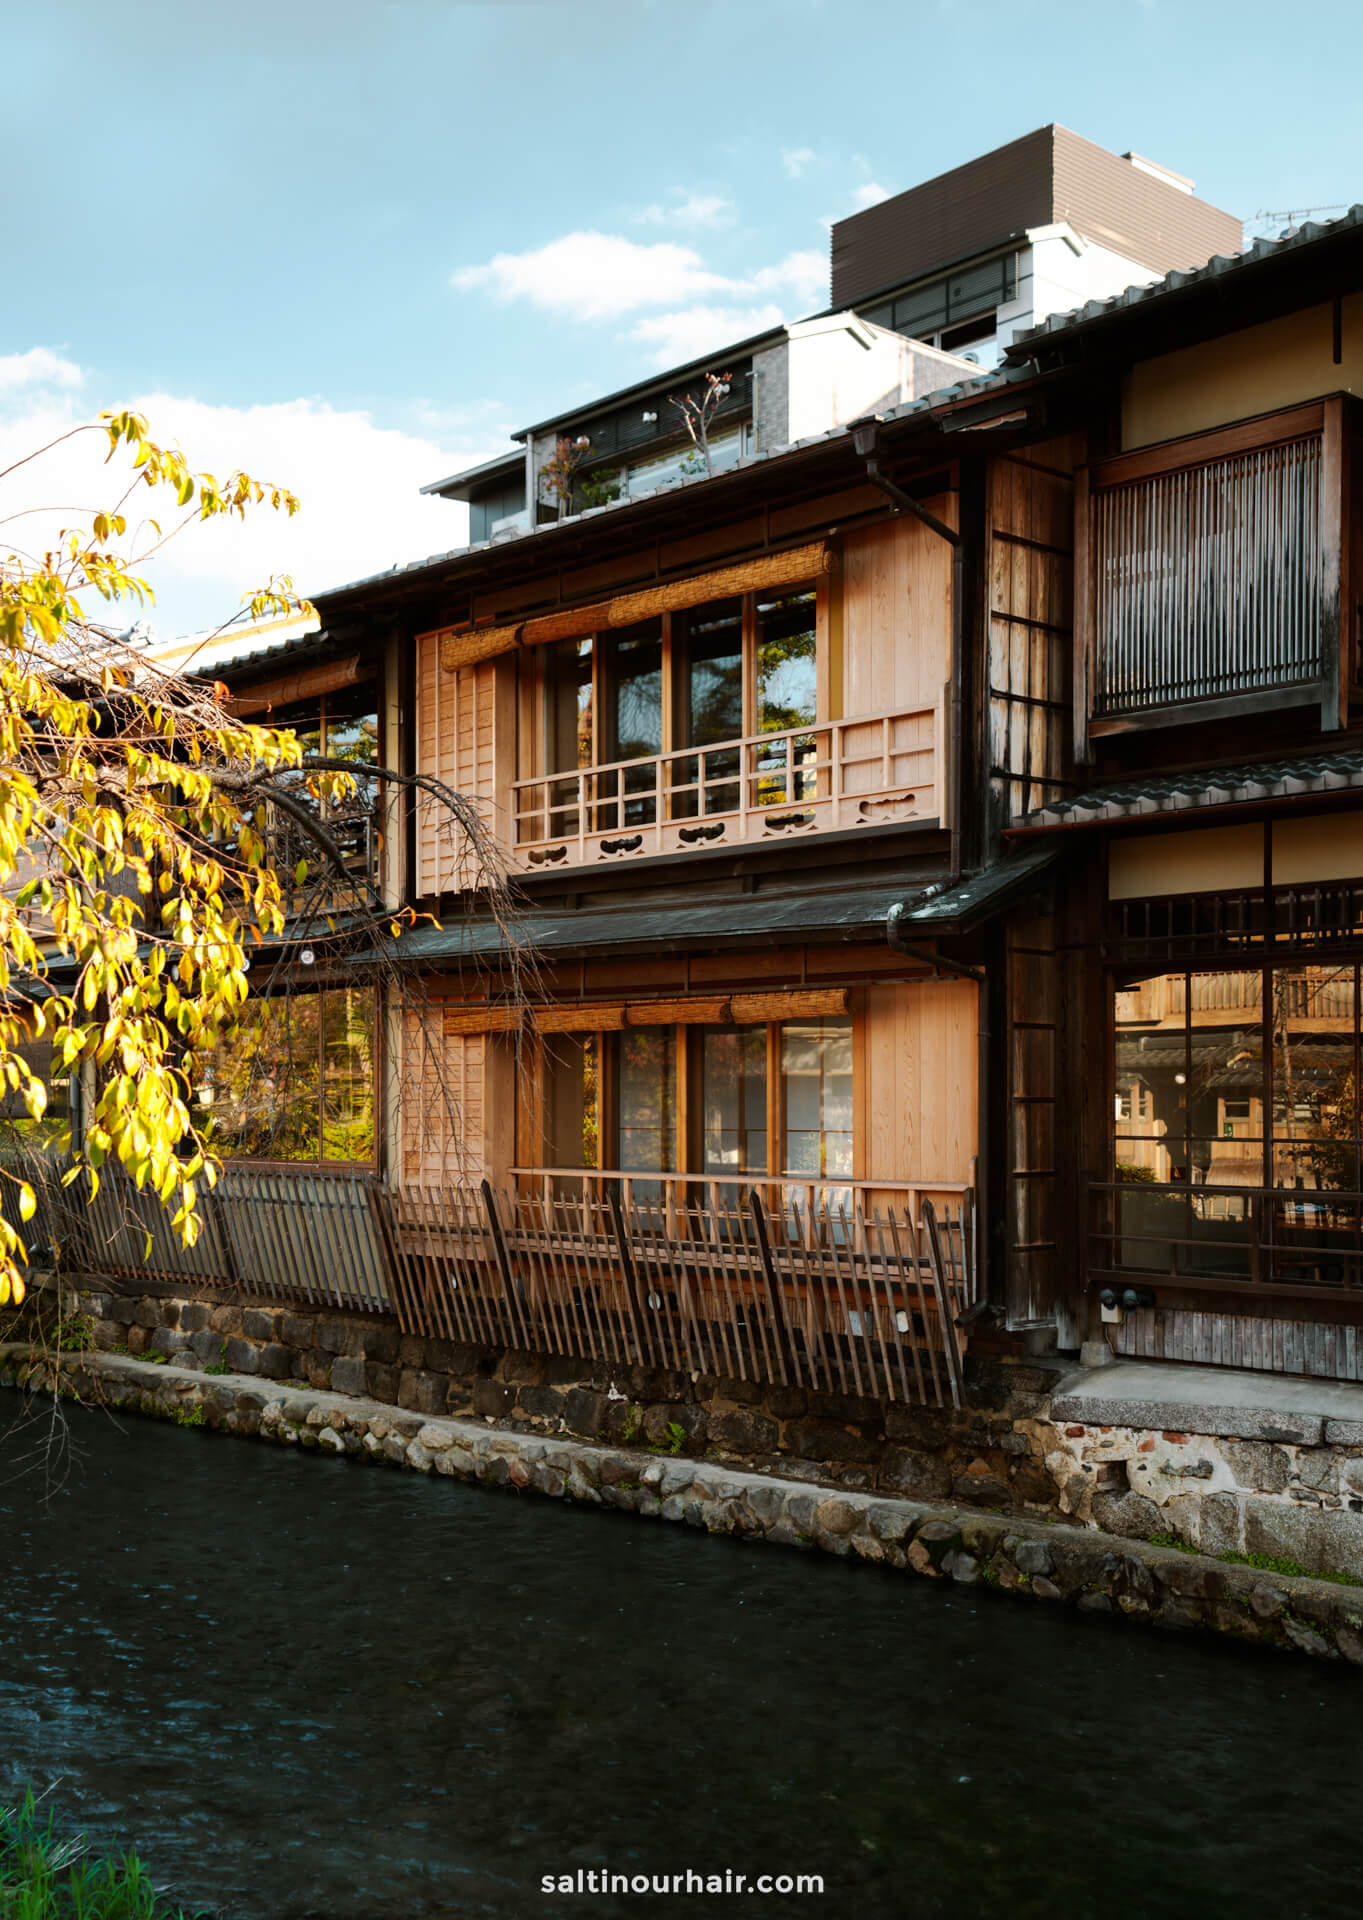 kyoto tourist locations